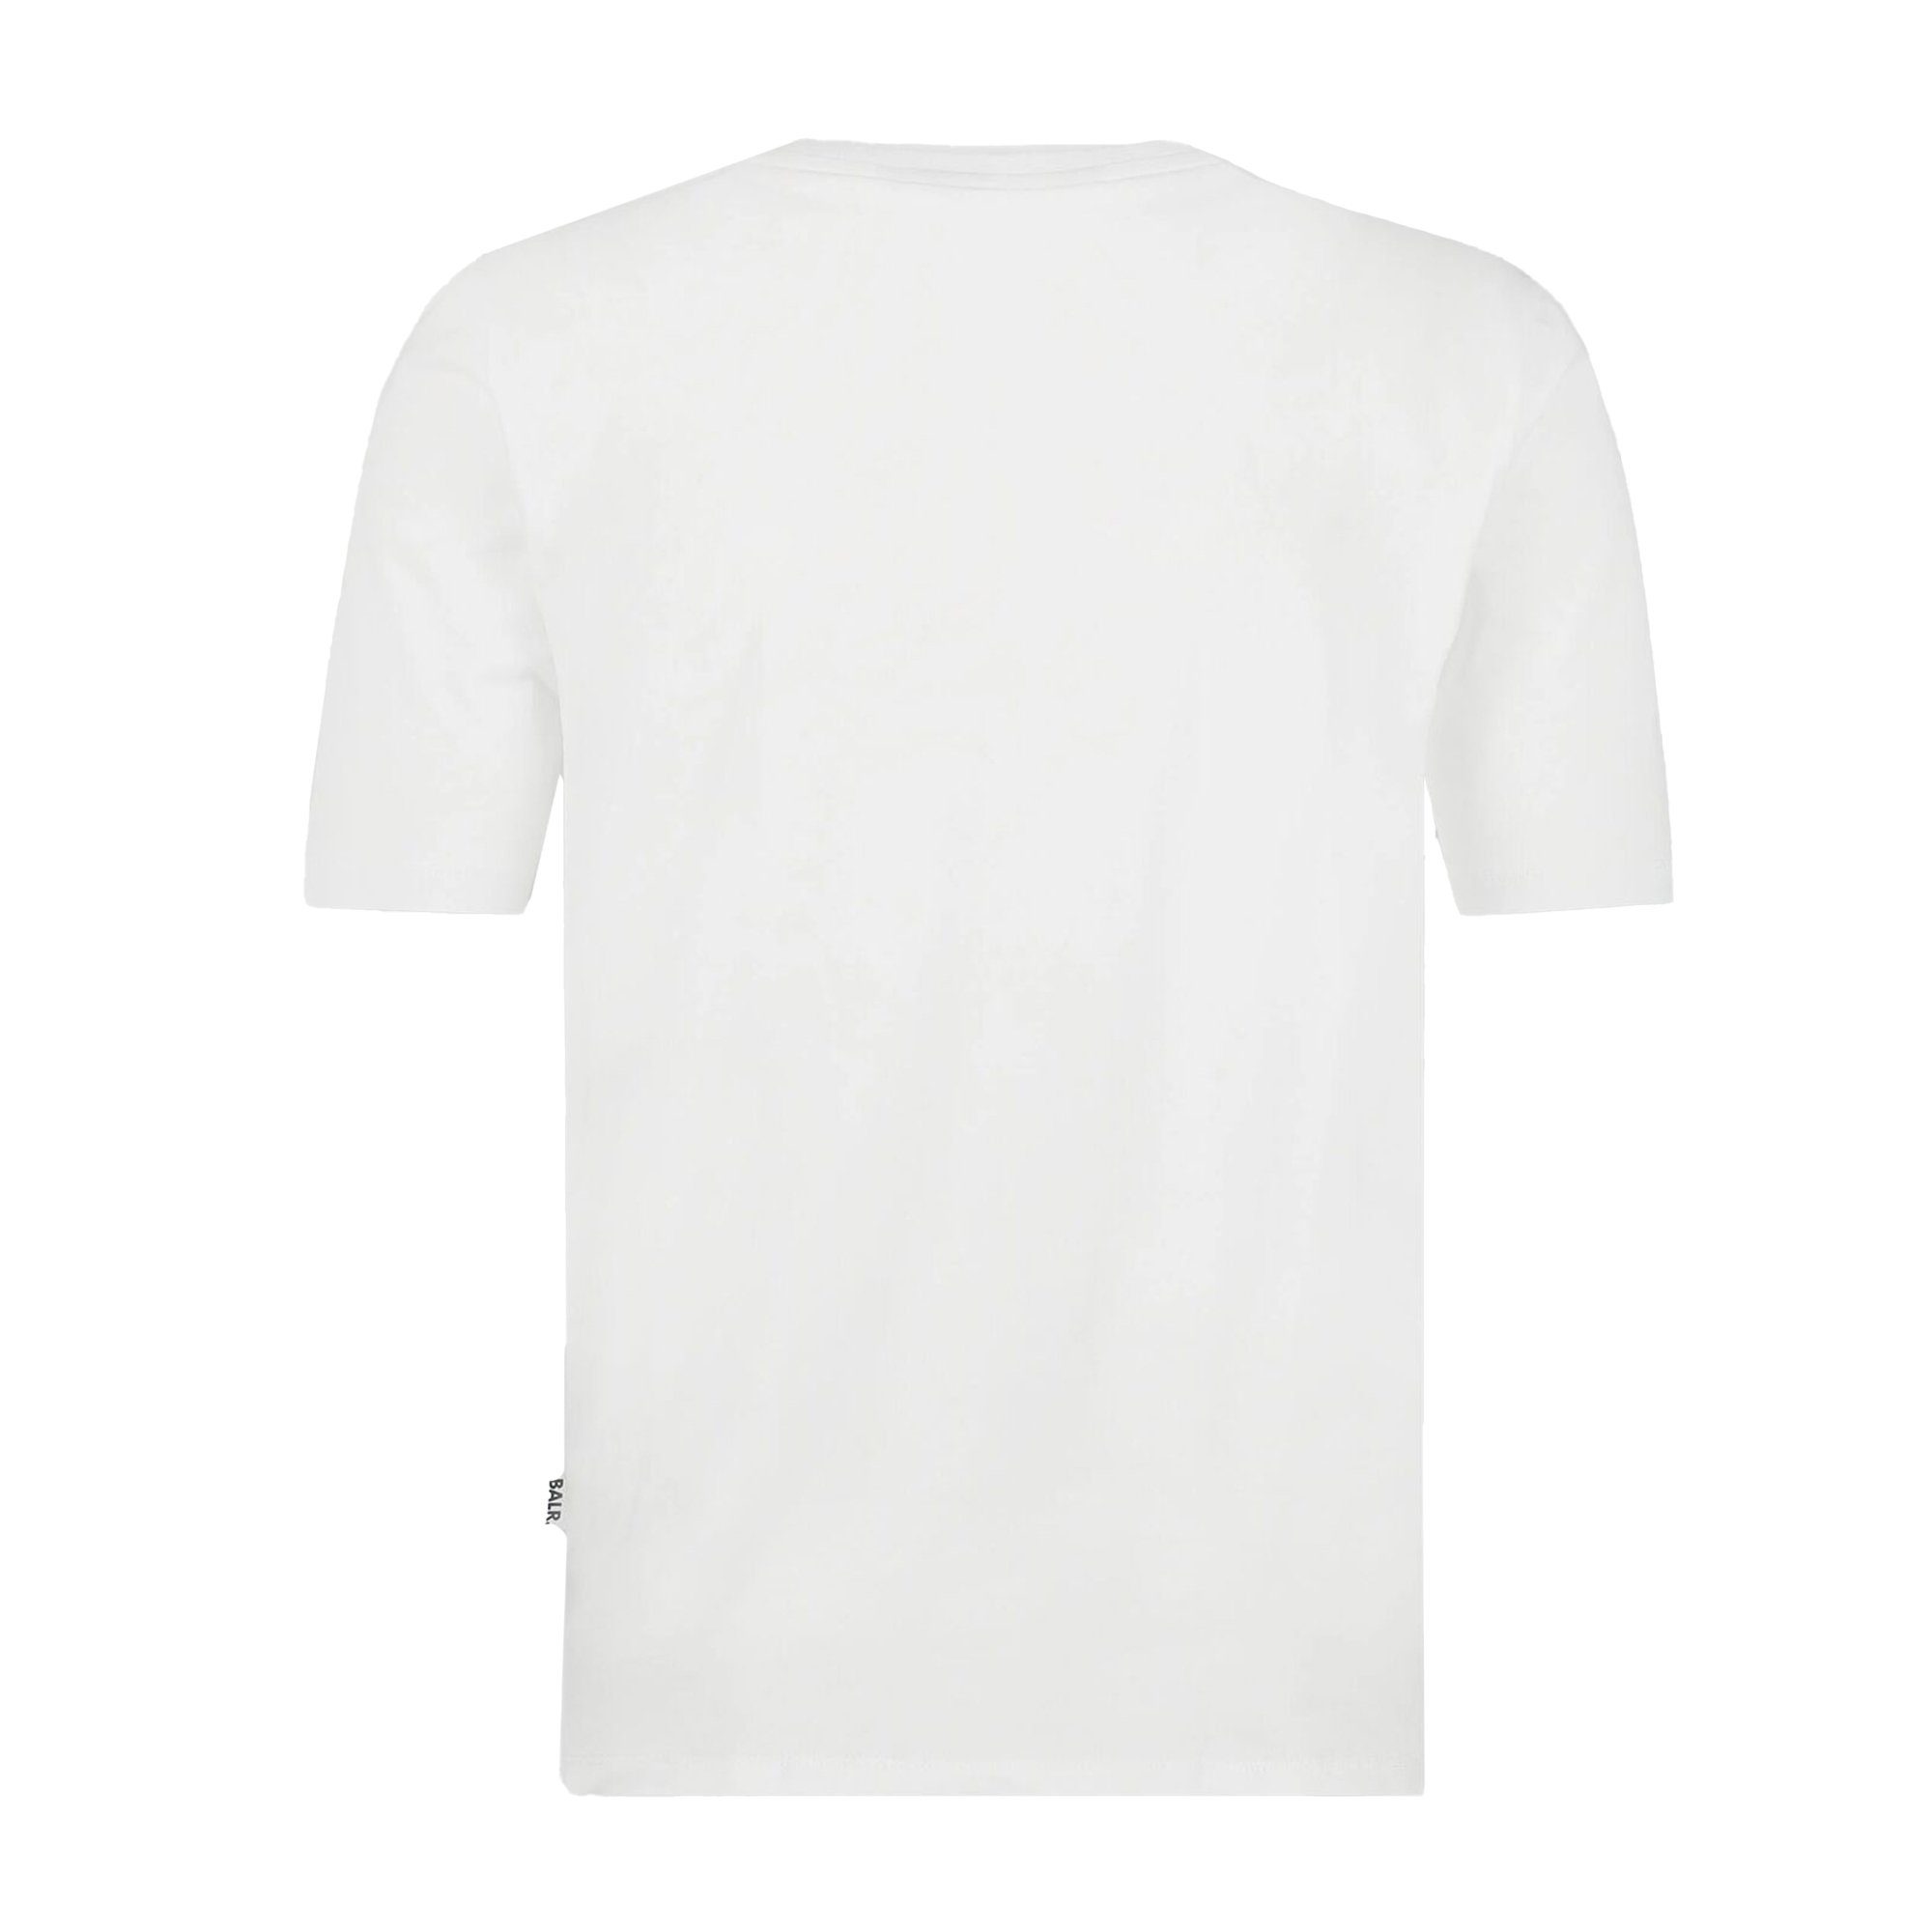 Small - BALR. T-Shirt Branded Weiß Herren Athletic Chest T-Shirt